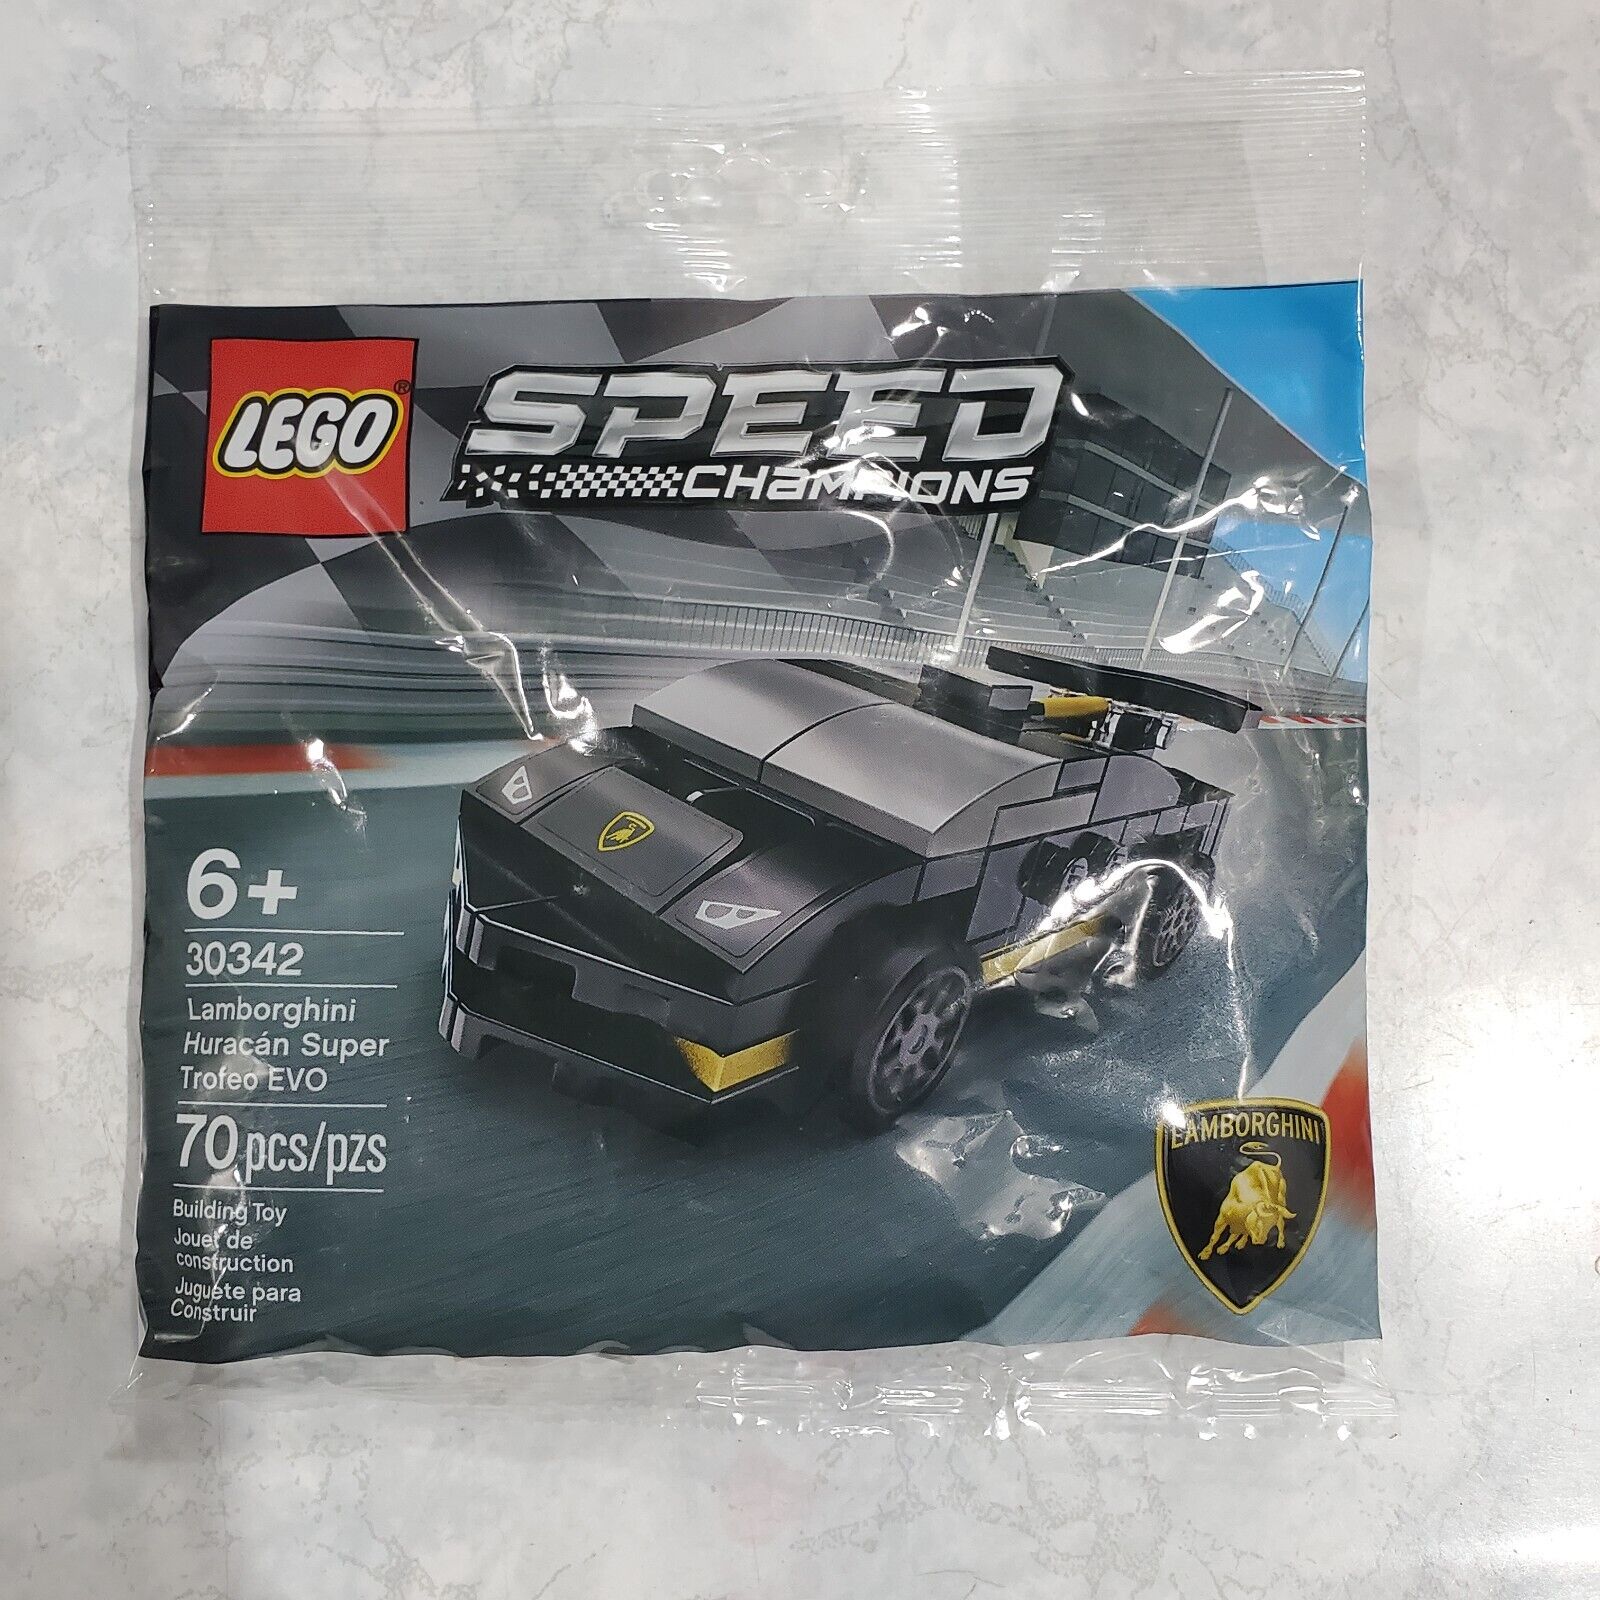 Lego 30342 Speed Champions Lamborghini Huracan Super Trofeo EVO Sealed NEW 70pcs